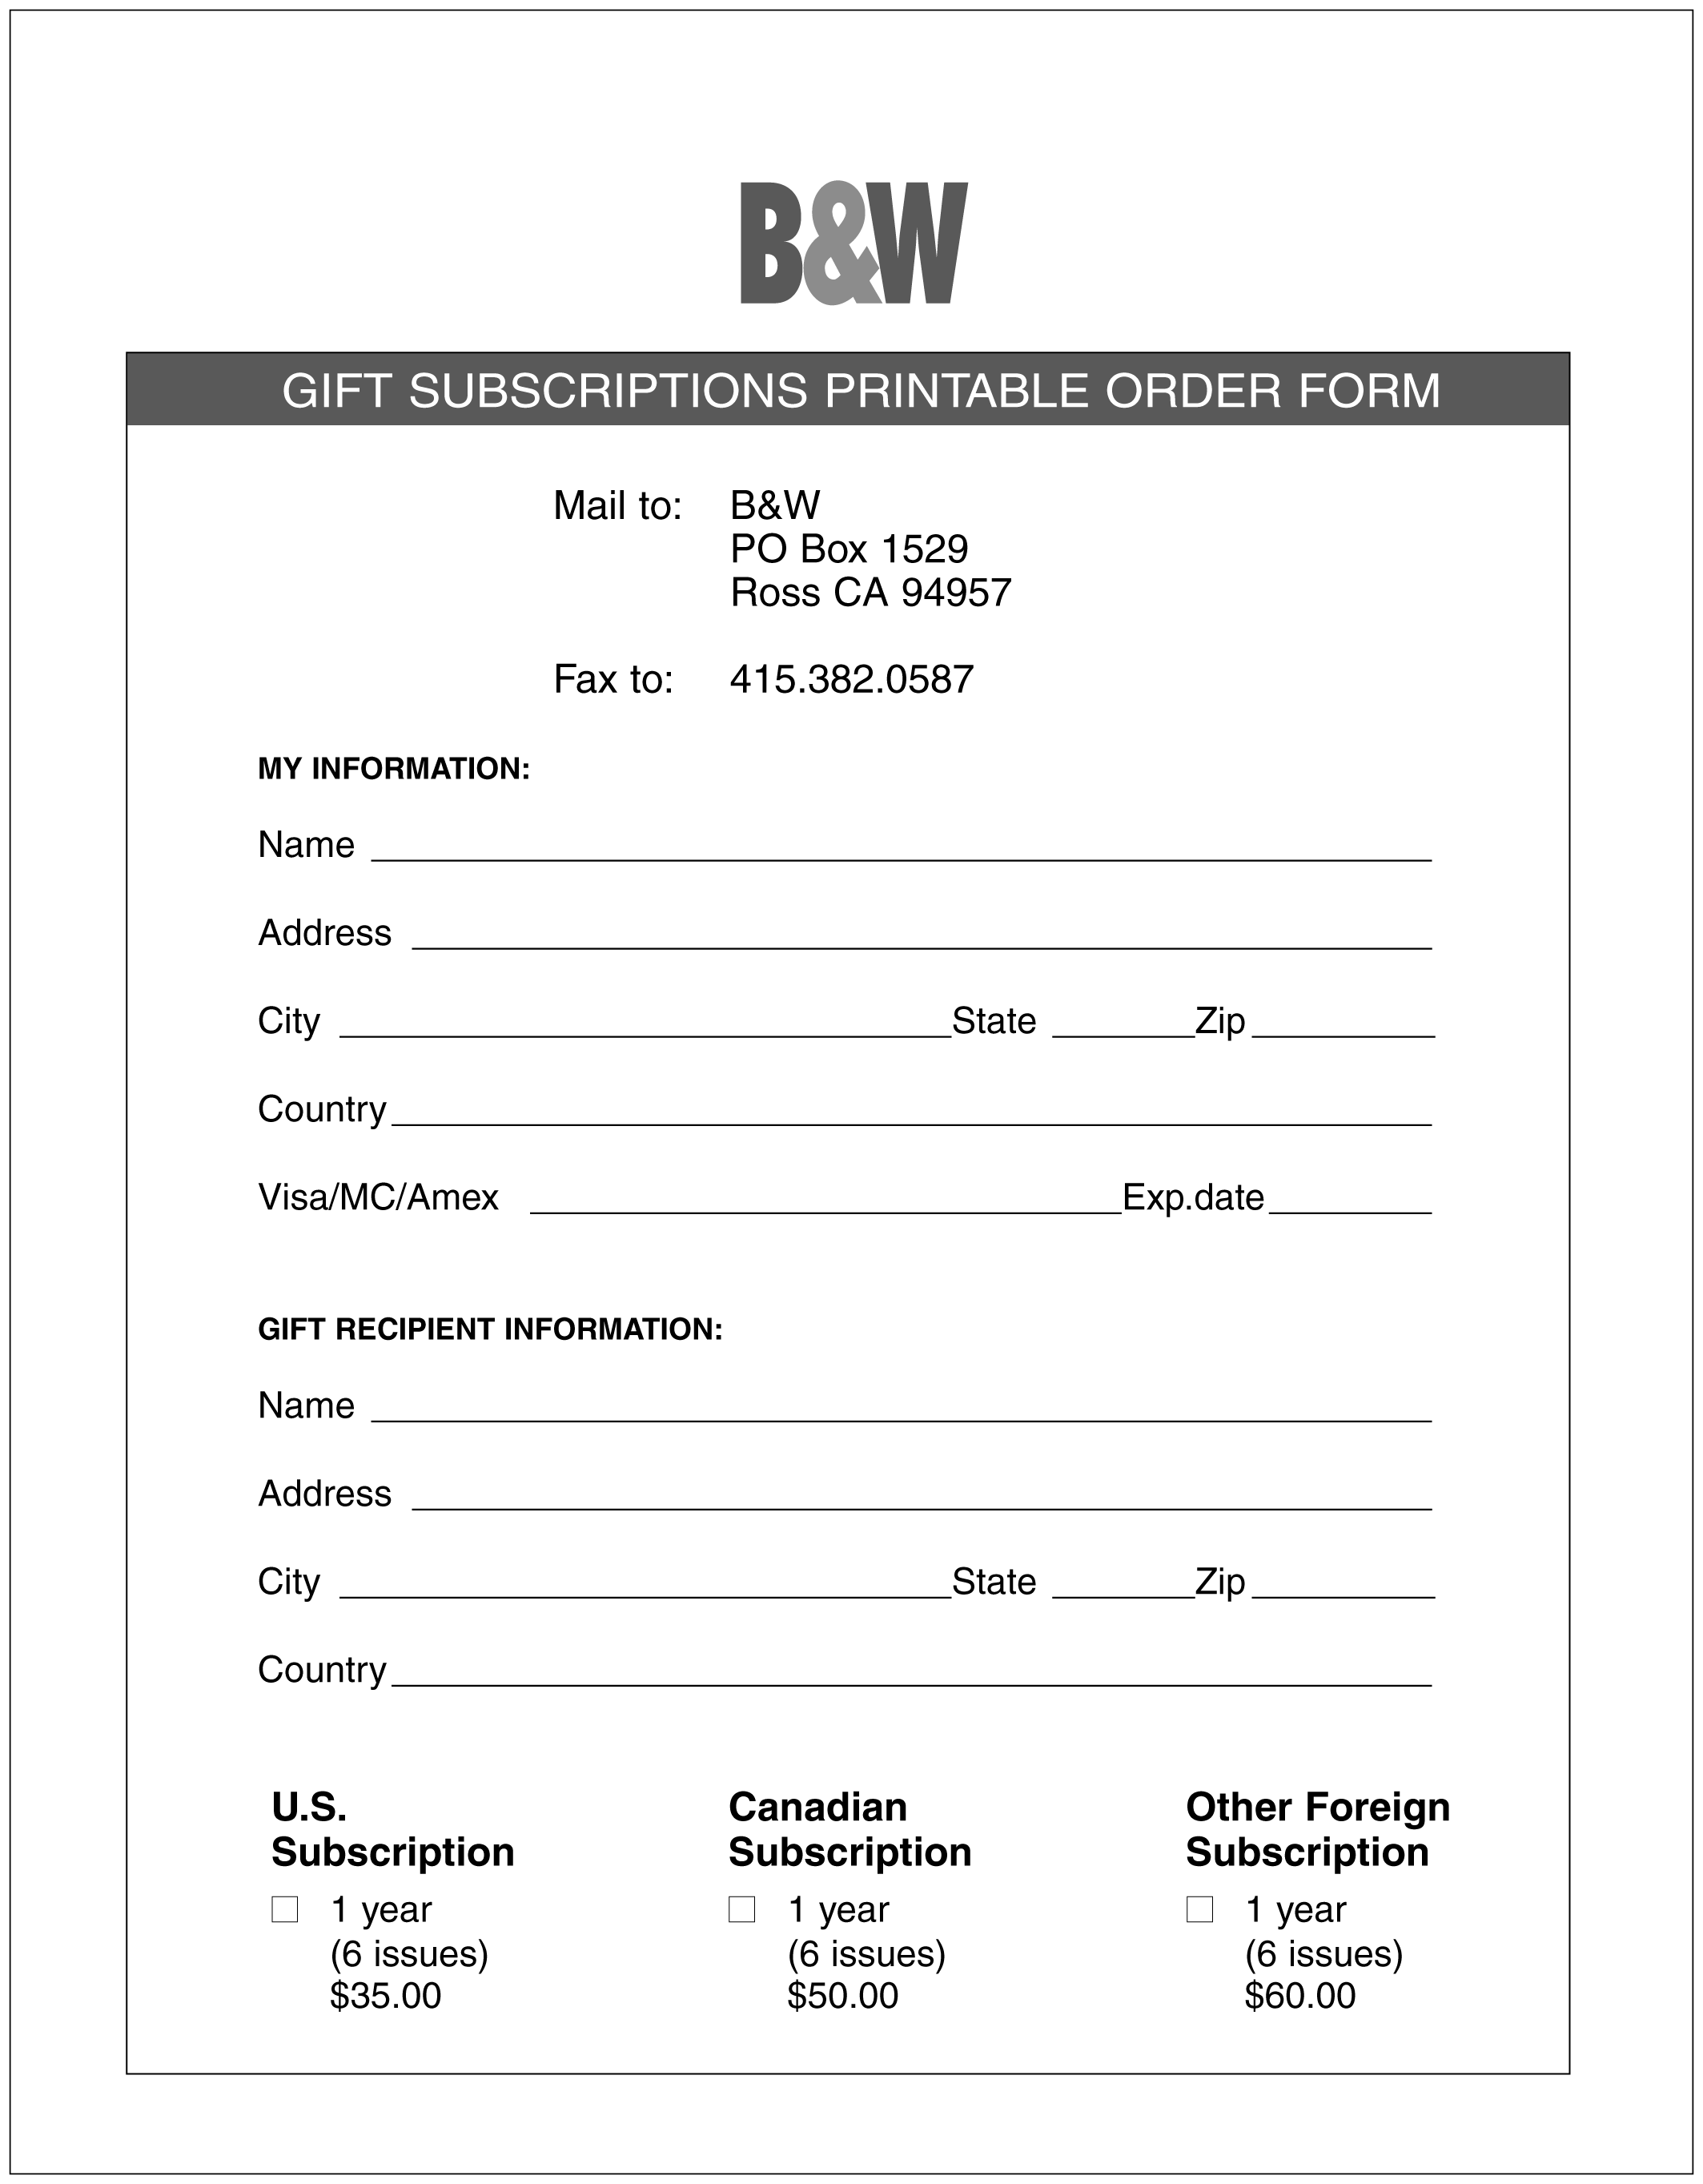 Black & White Gift Subscription Order Form